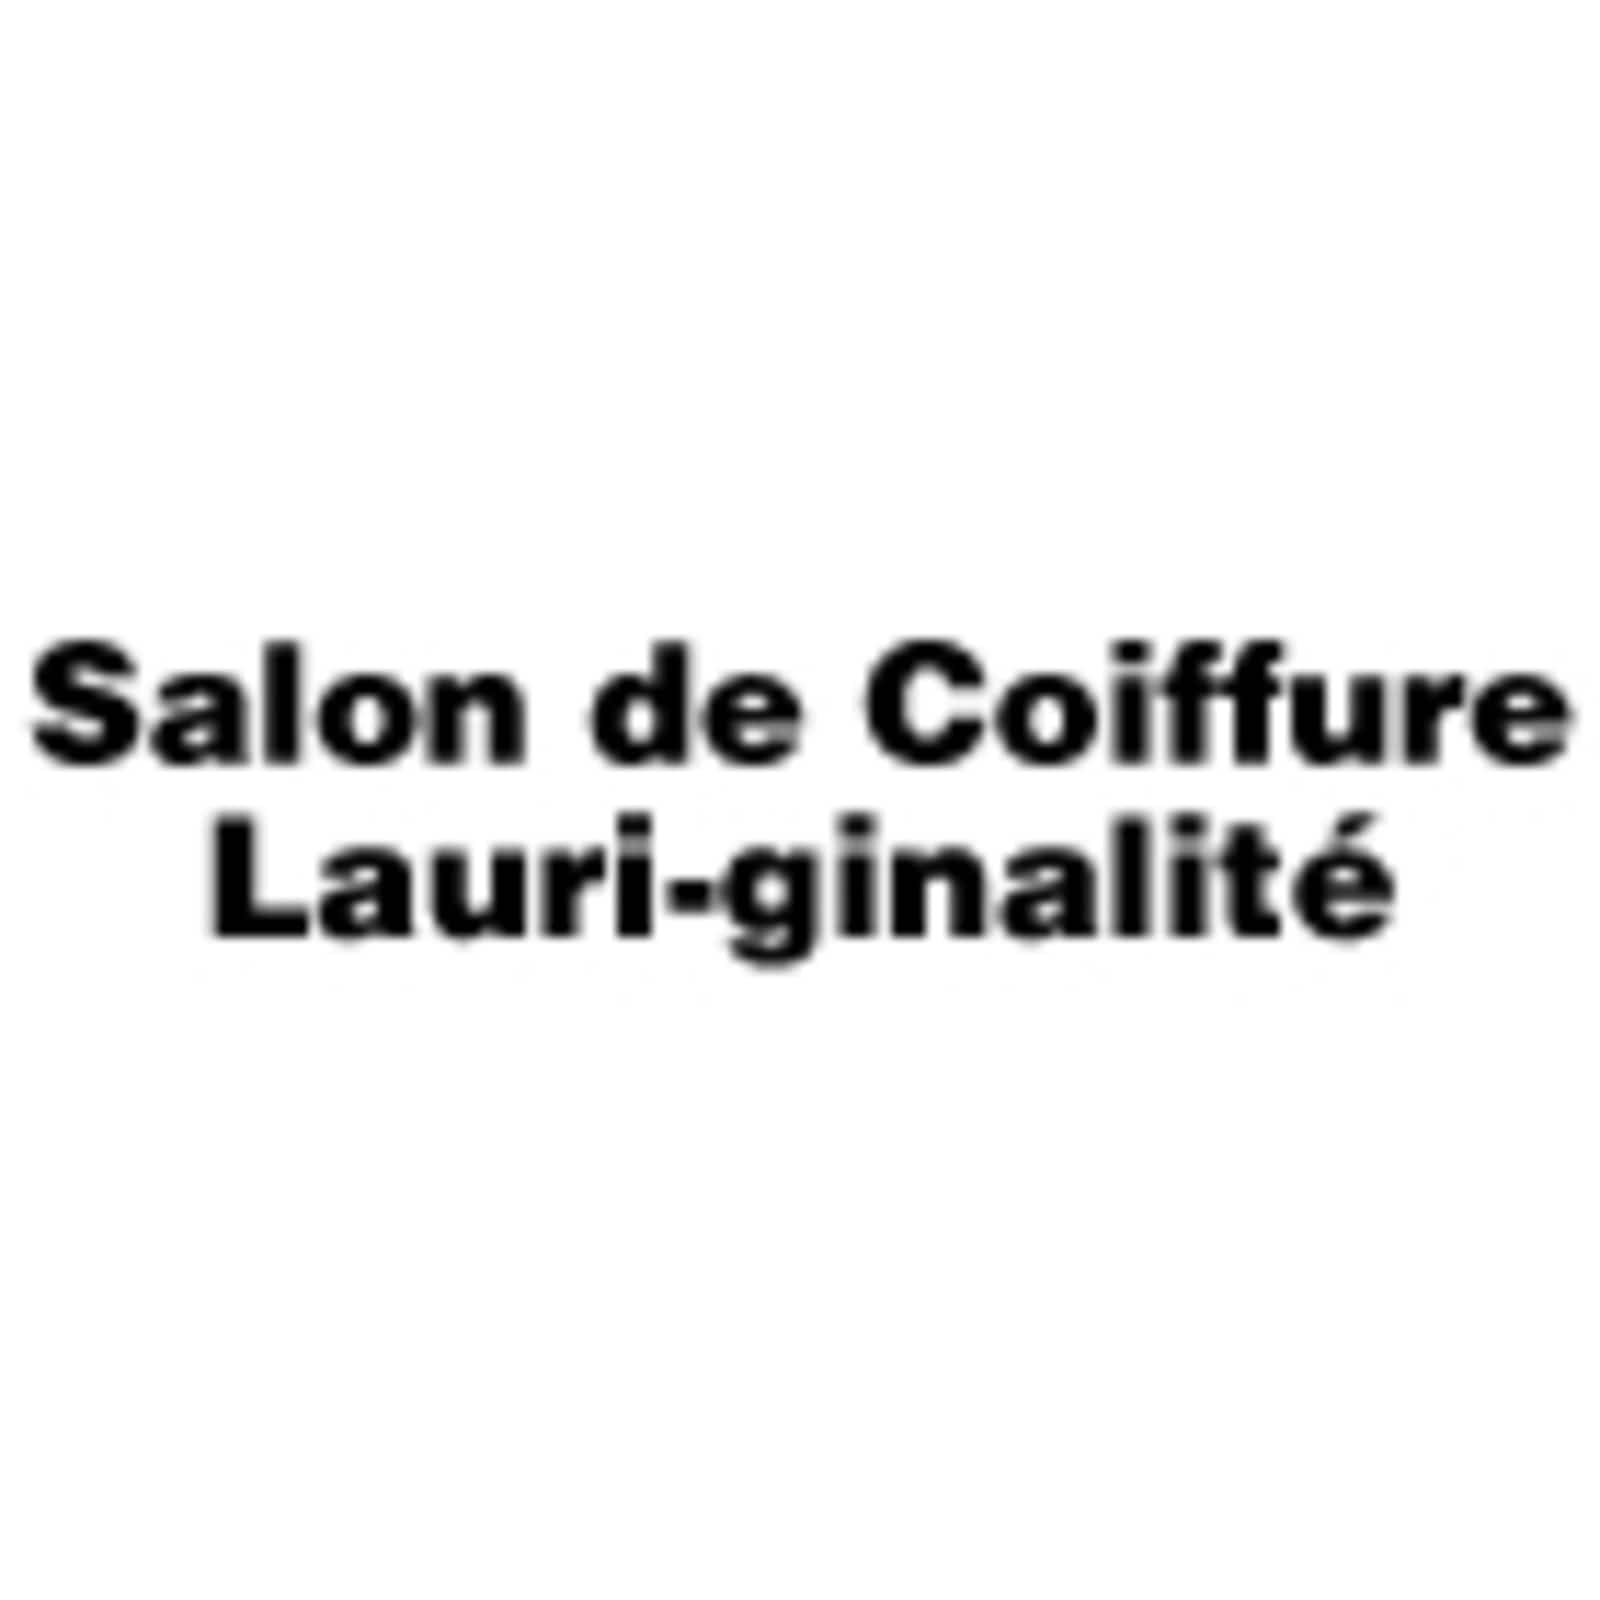 Salon de Coiffure Lauri-ginalité 62 Rue Fradette, Saint-Damien-de-Buckland Quebec G0R 2Y0